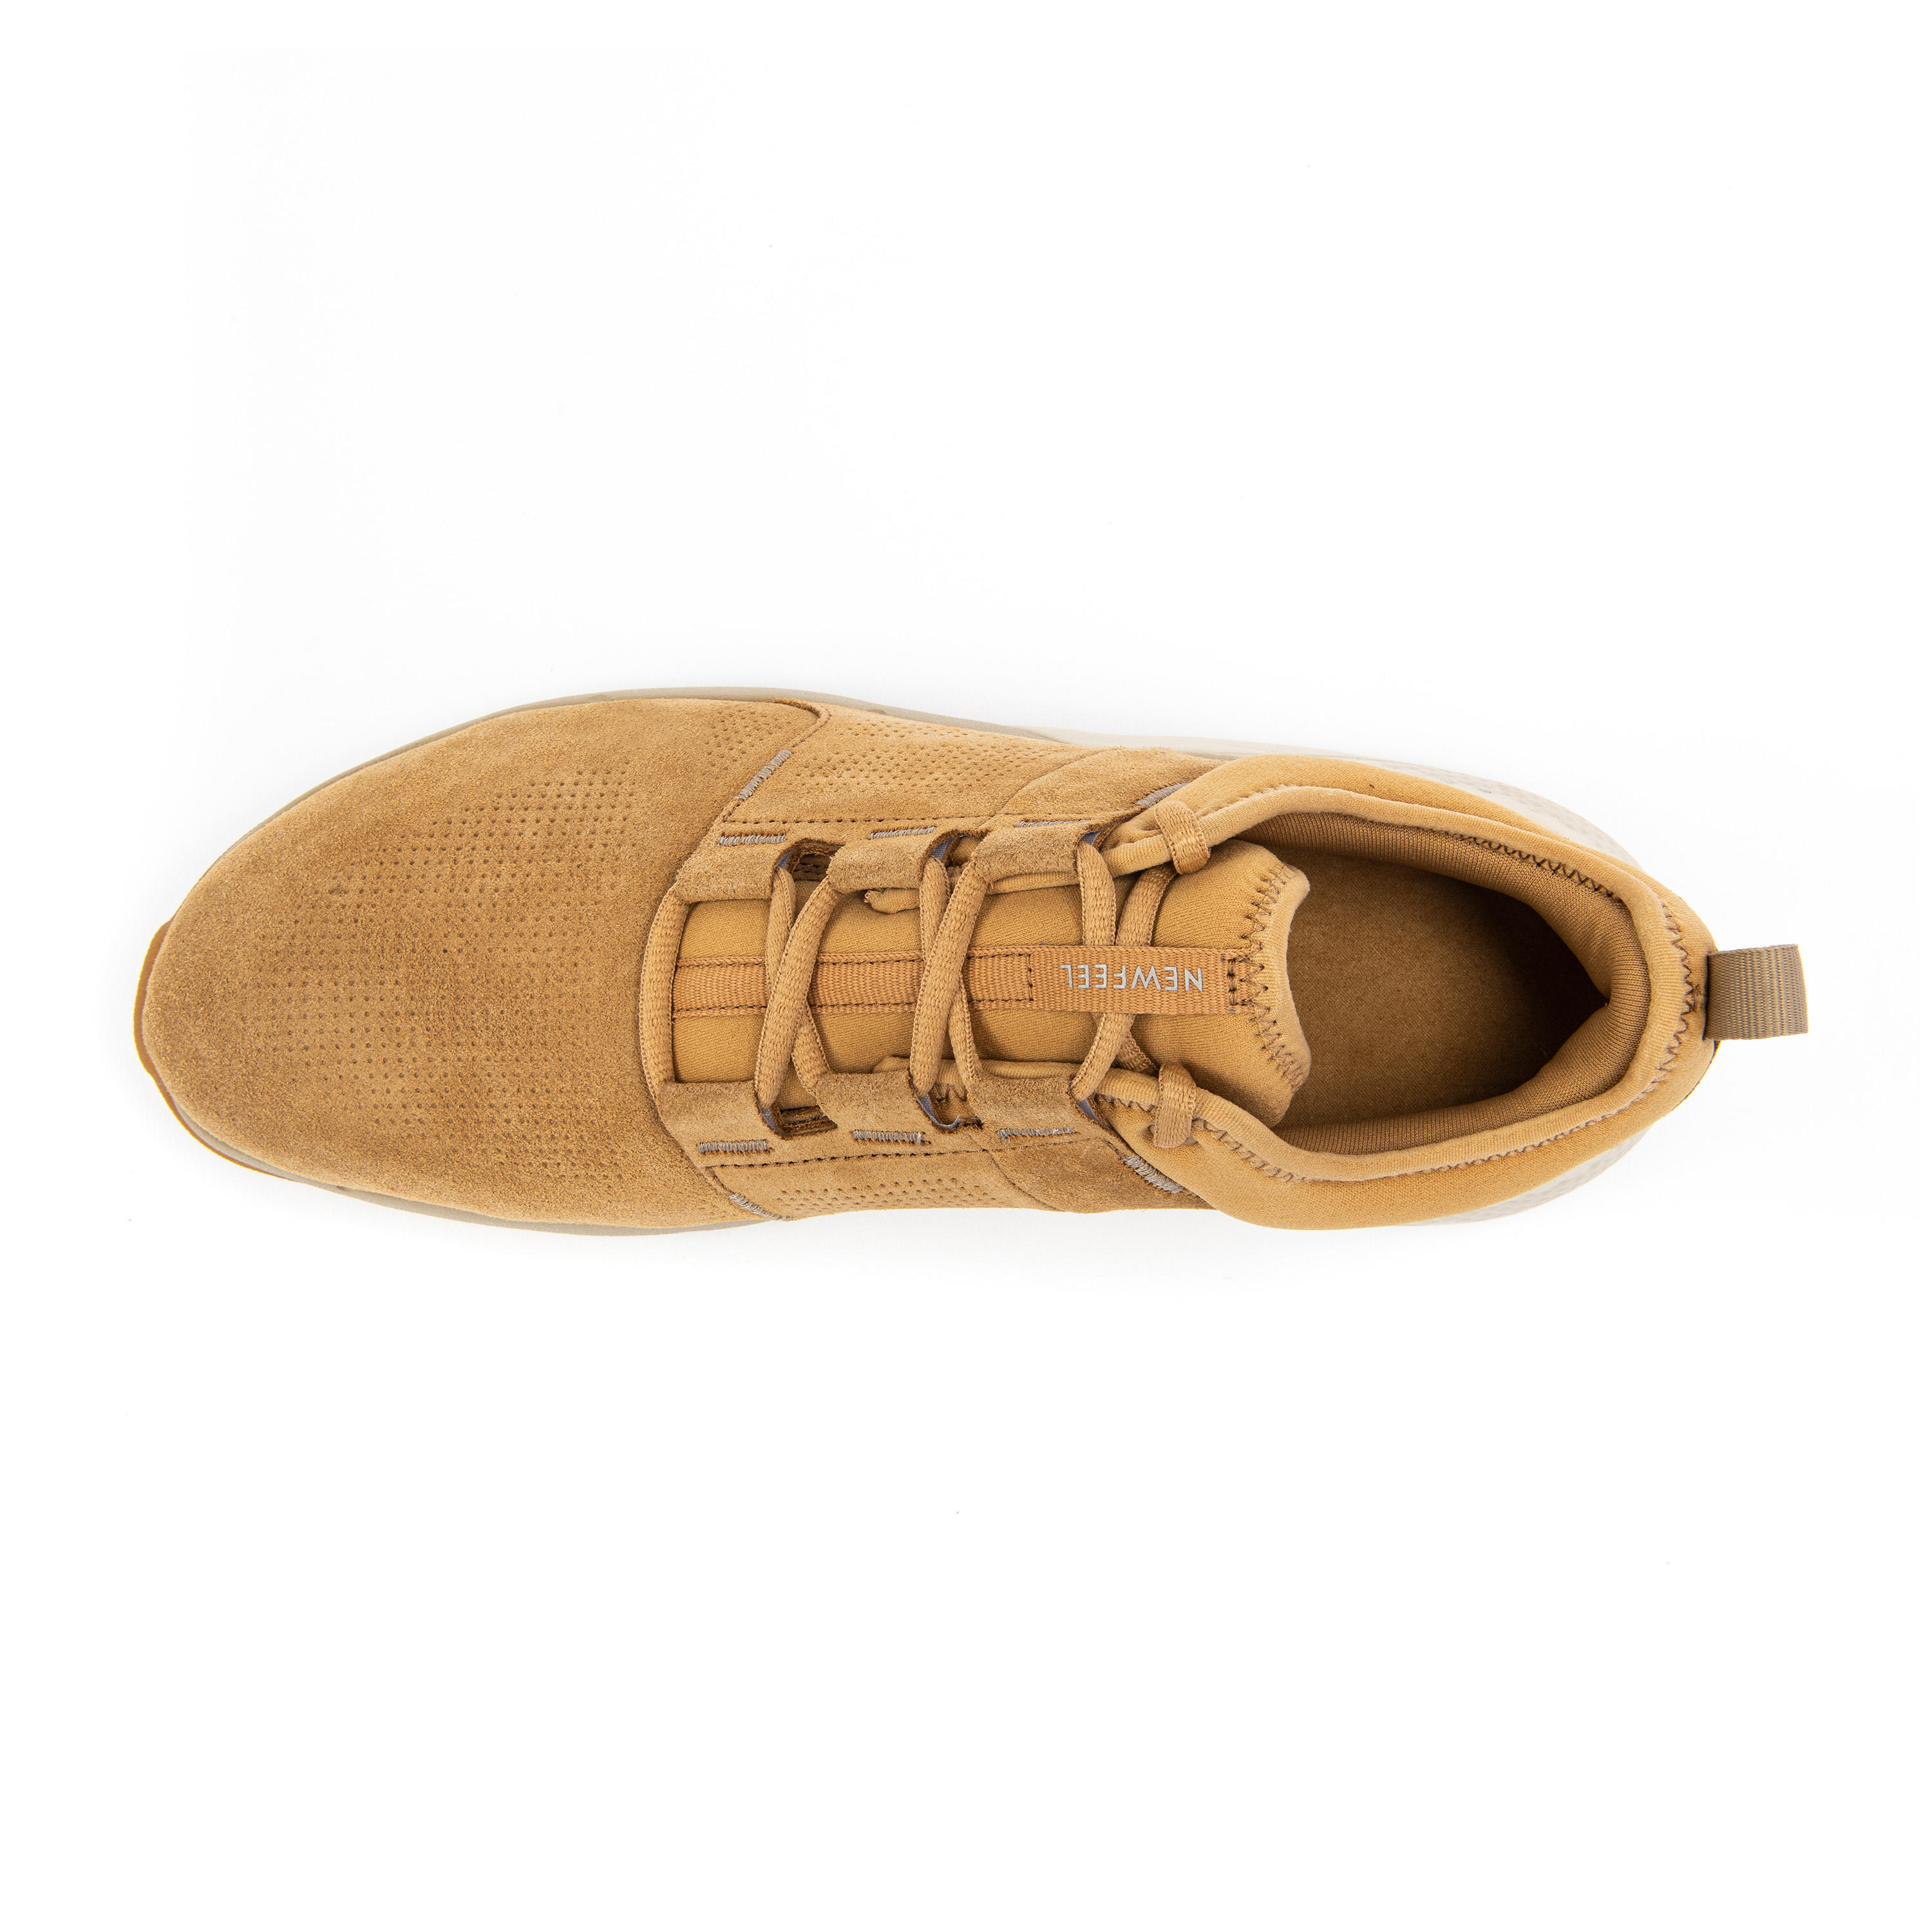 Actiwalk Comfort Leather Men's Urban Walking Shoes - Camel 27/43